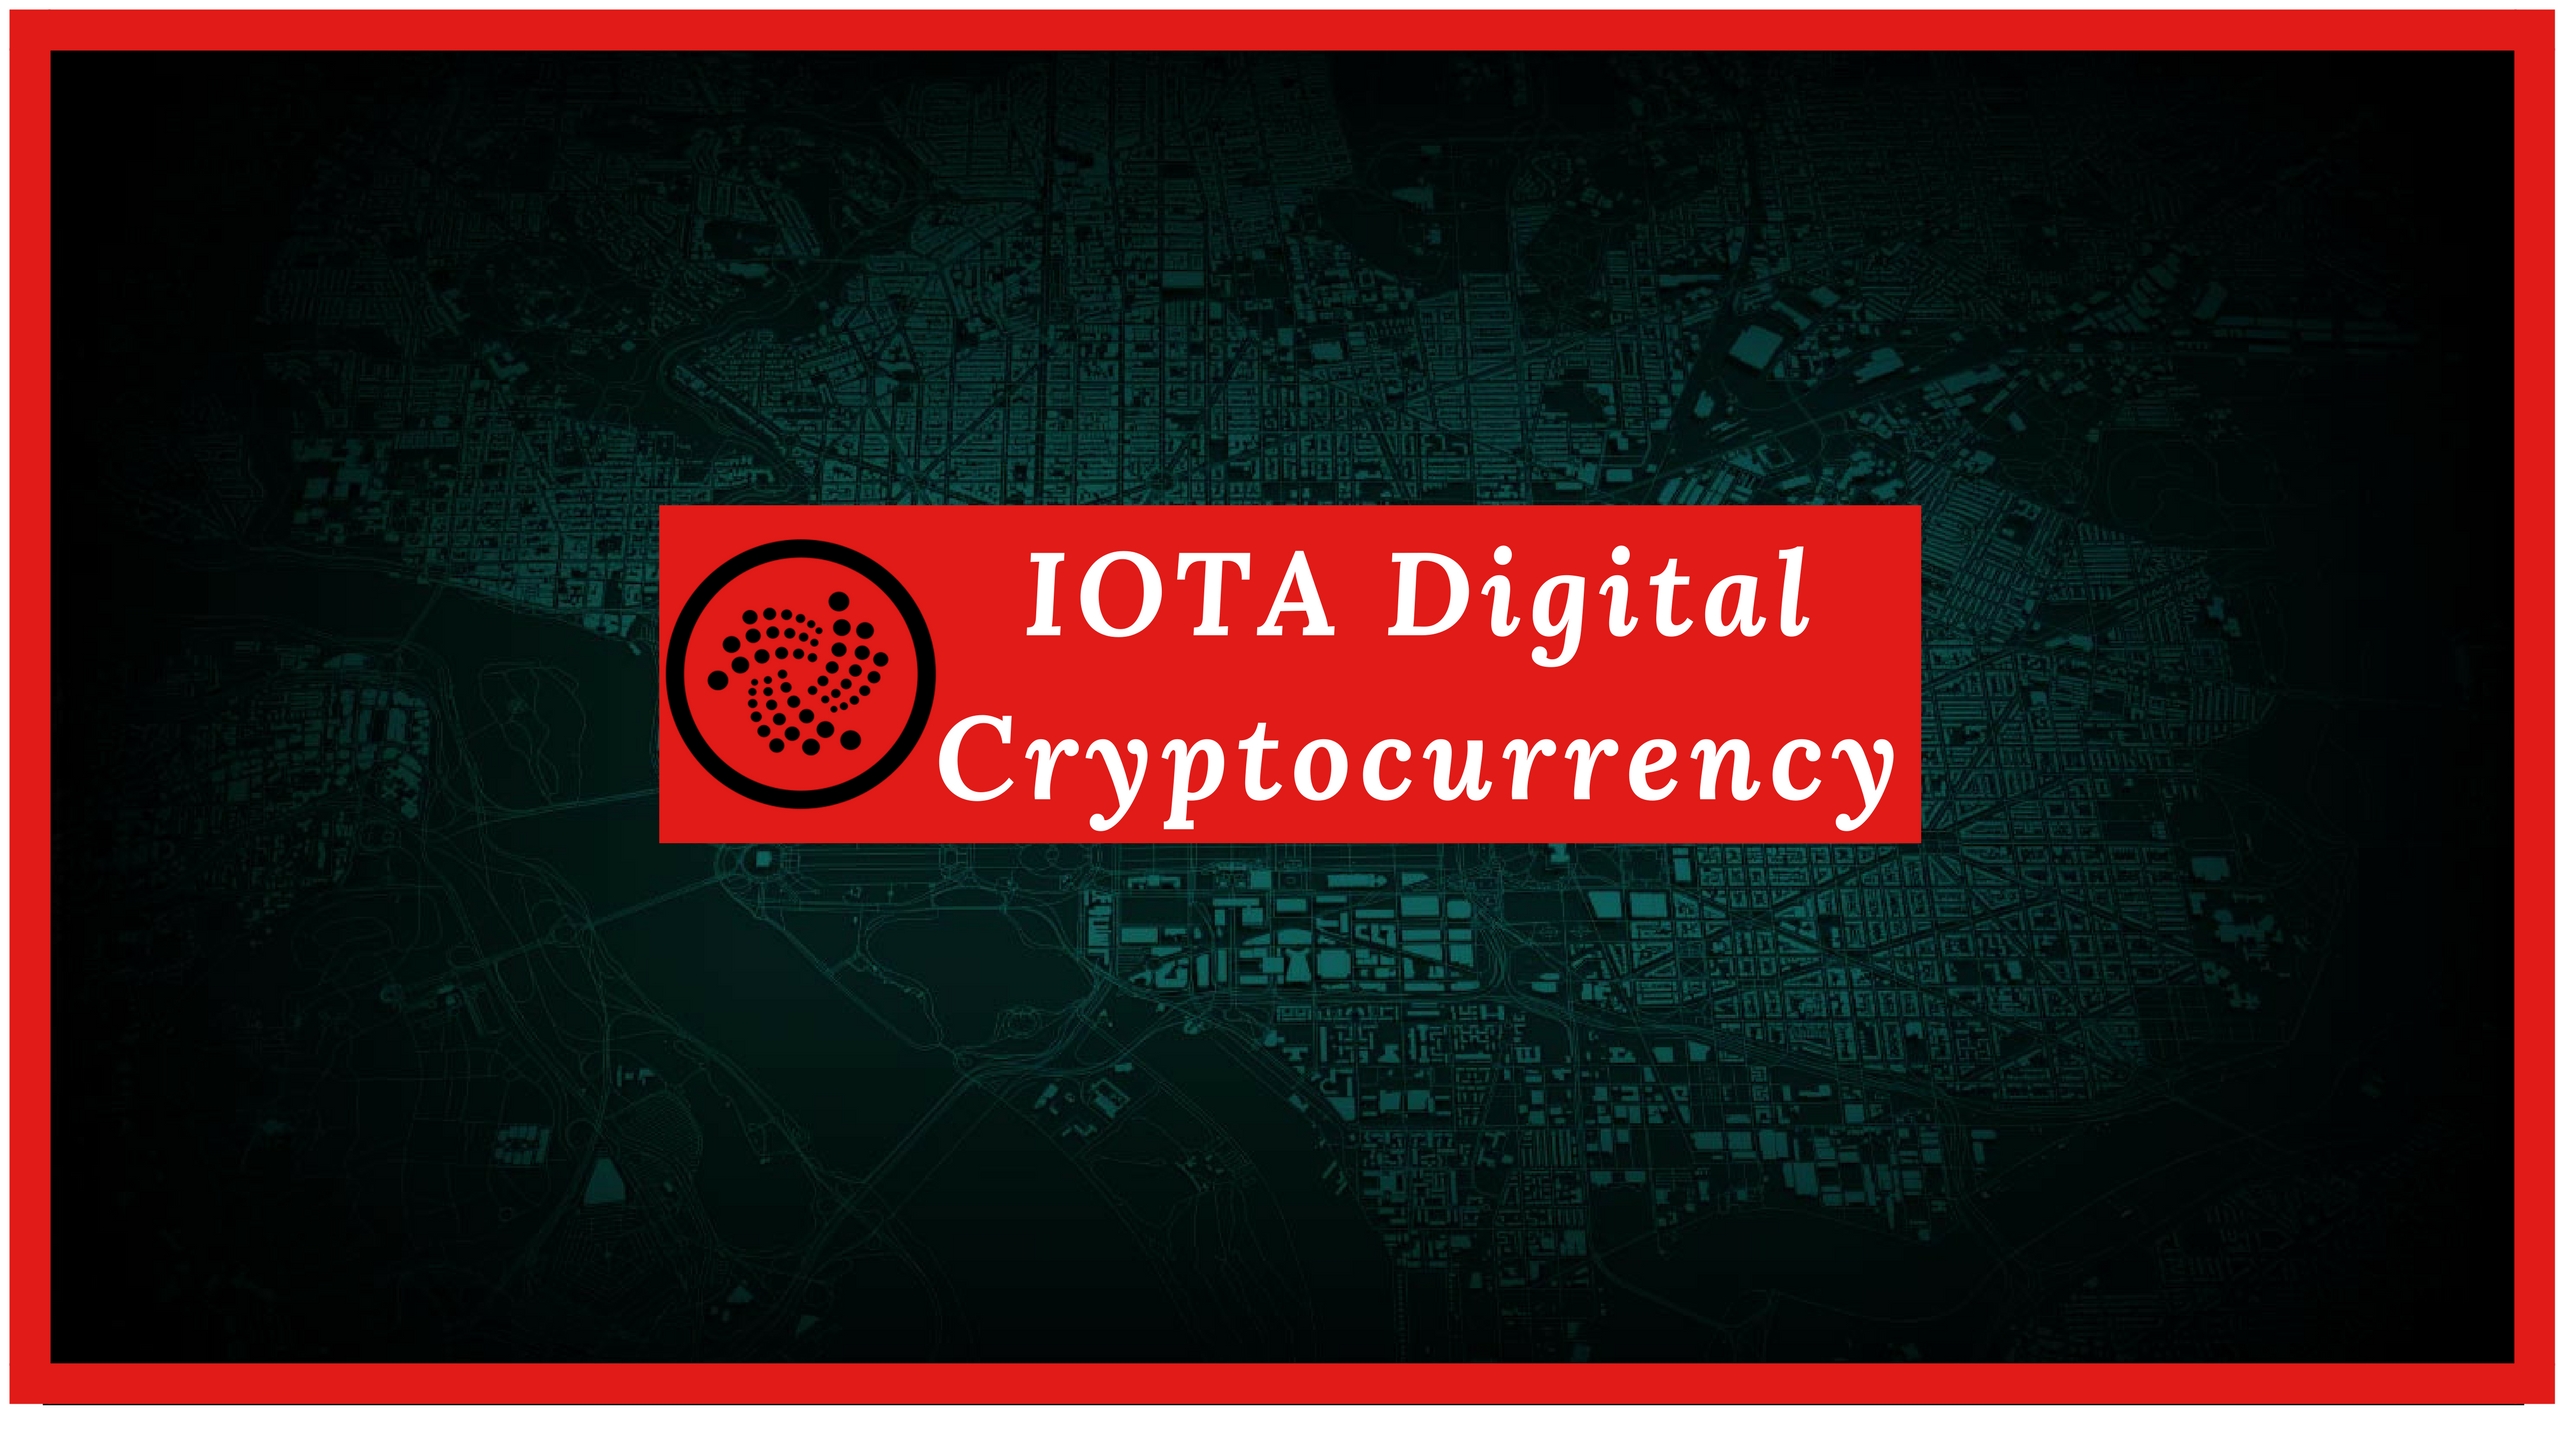 IOTA Digital Cryptocurrency